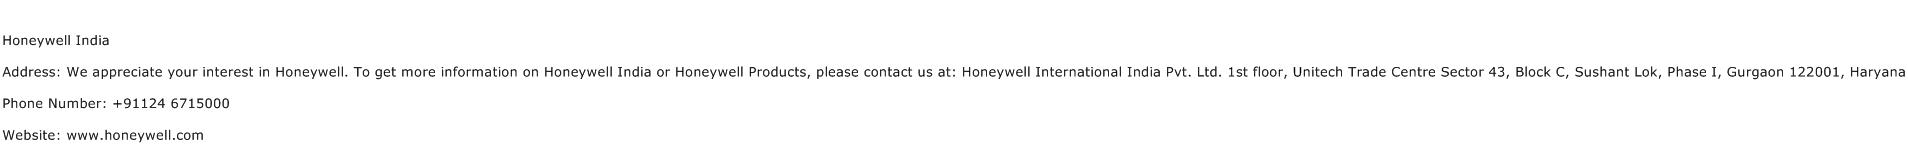 Honeywell India Address Contact Number